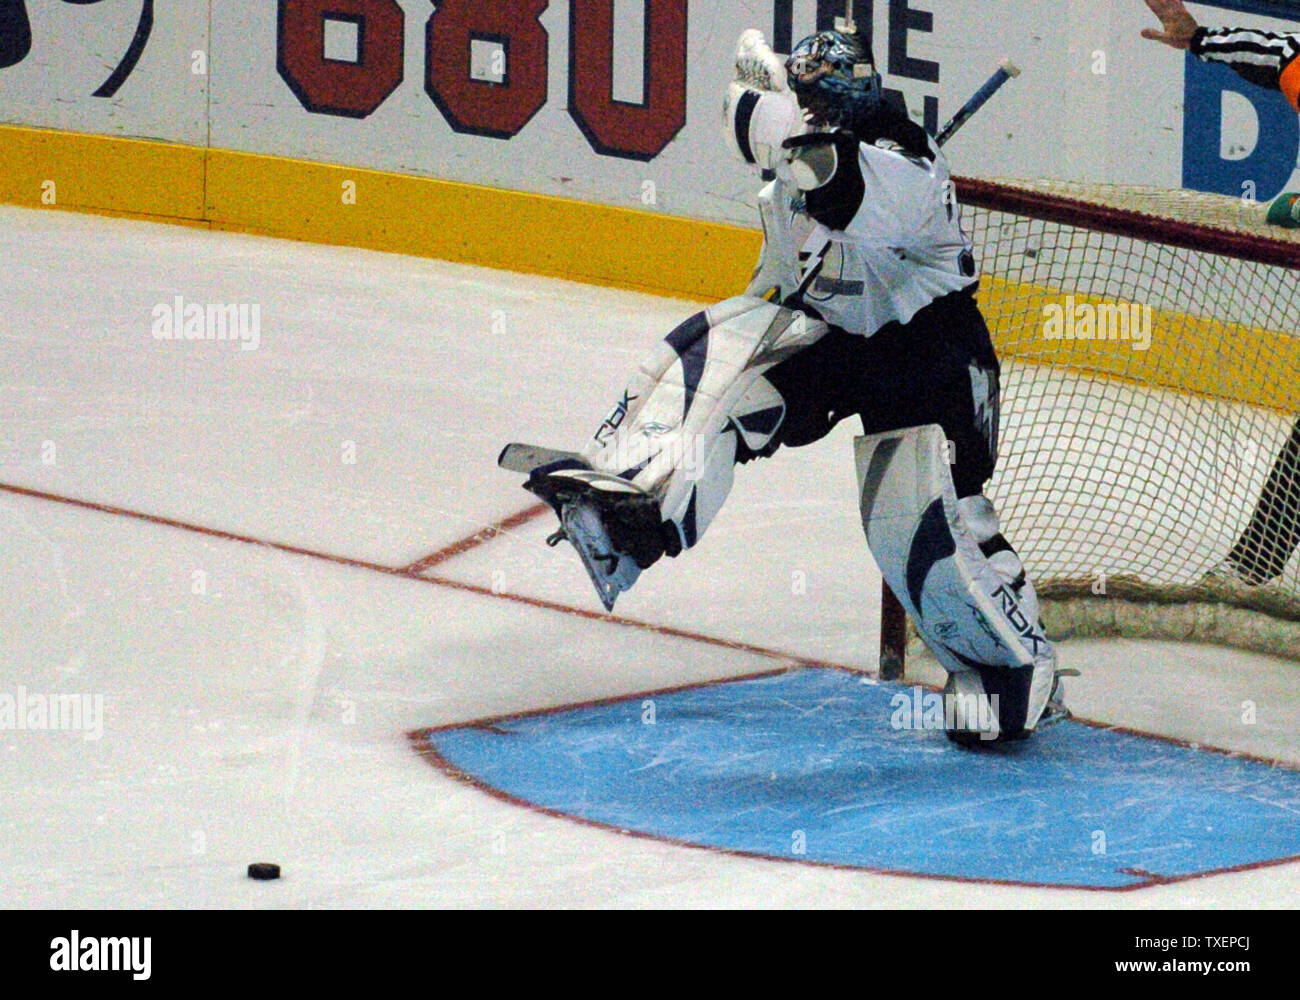 Snatcher Demko strikes again! 😳 📺: @sportsnet #NHLonSN